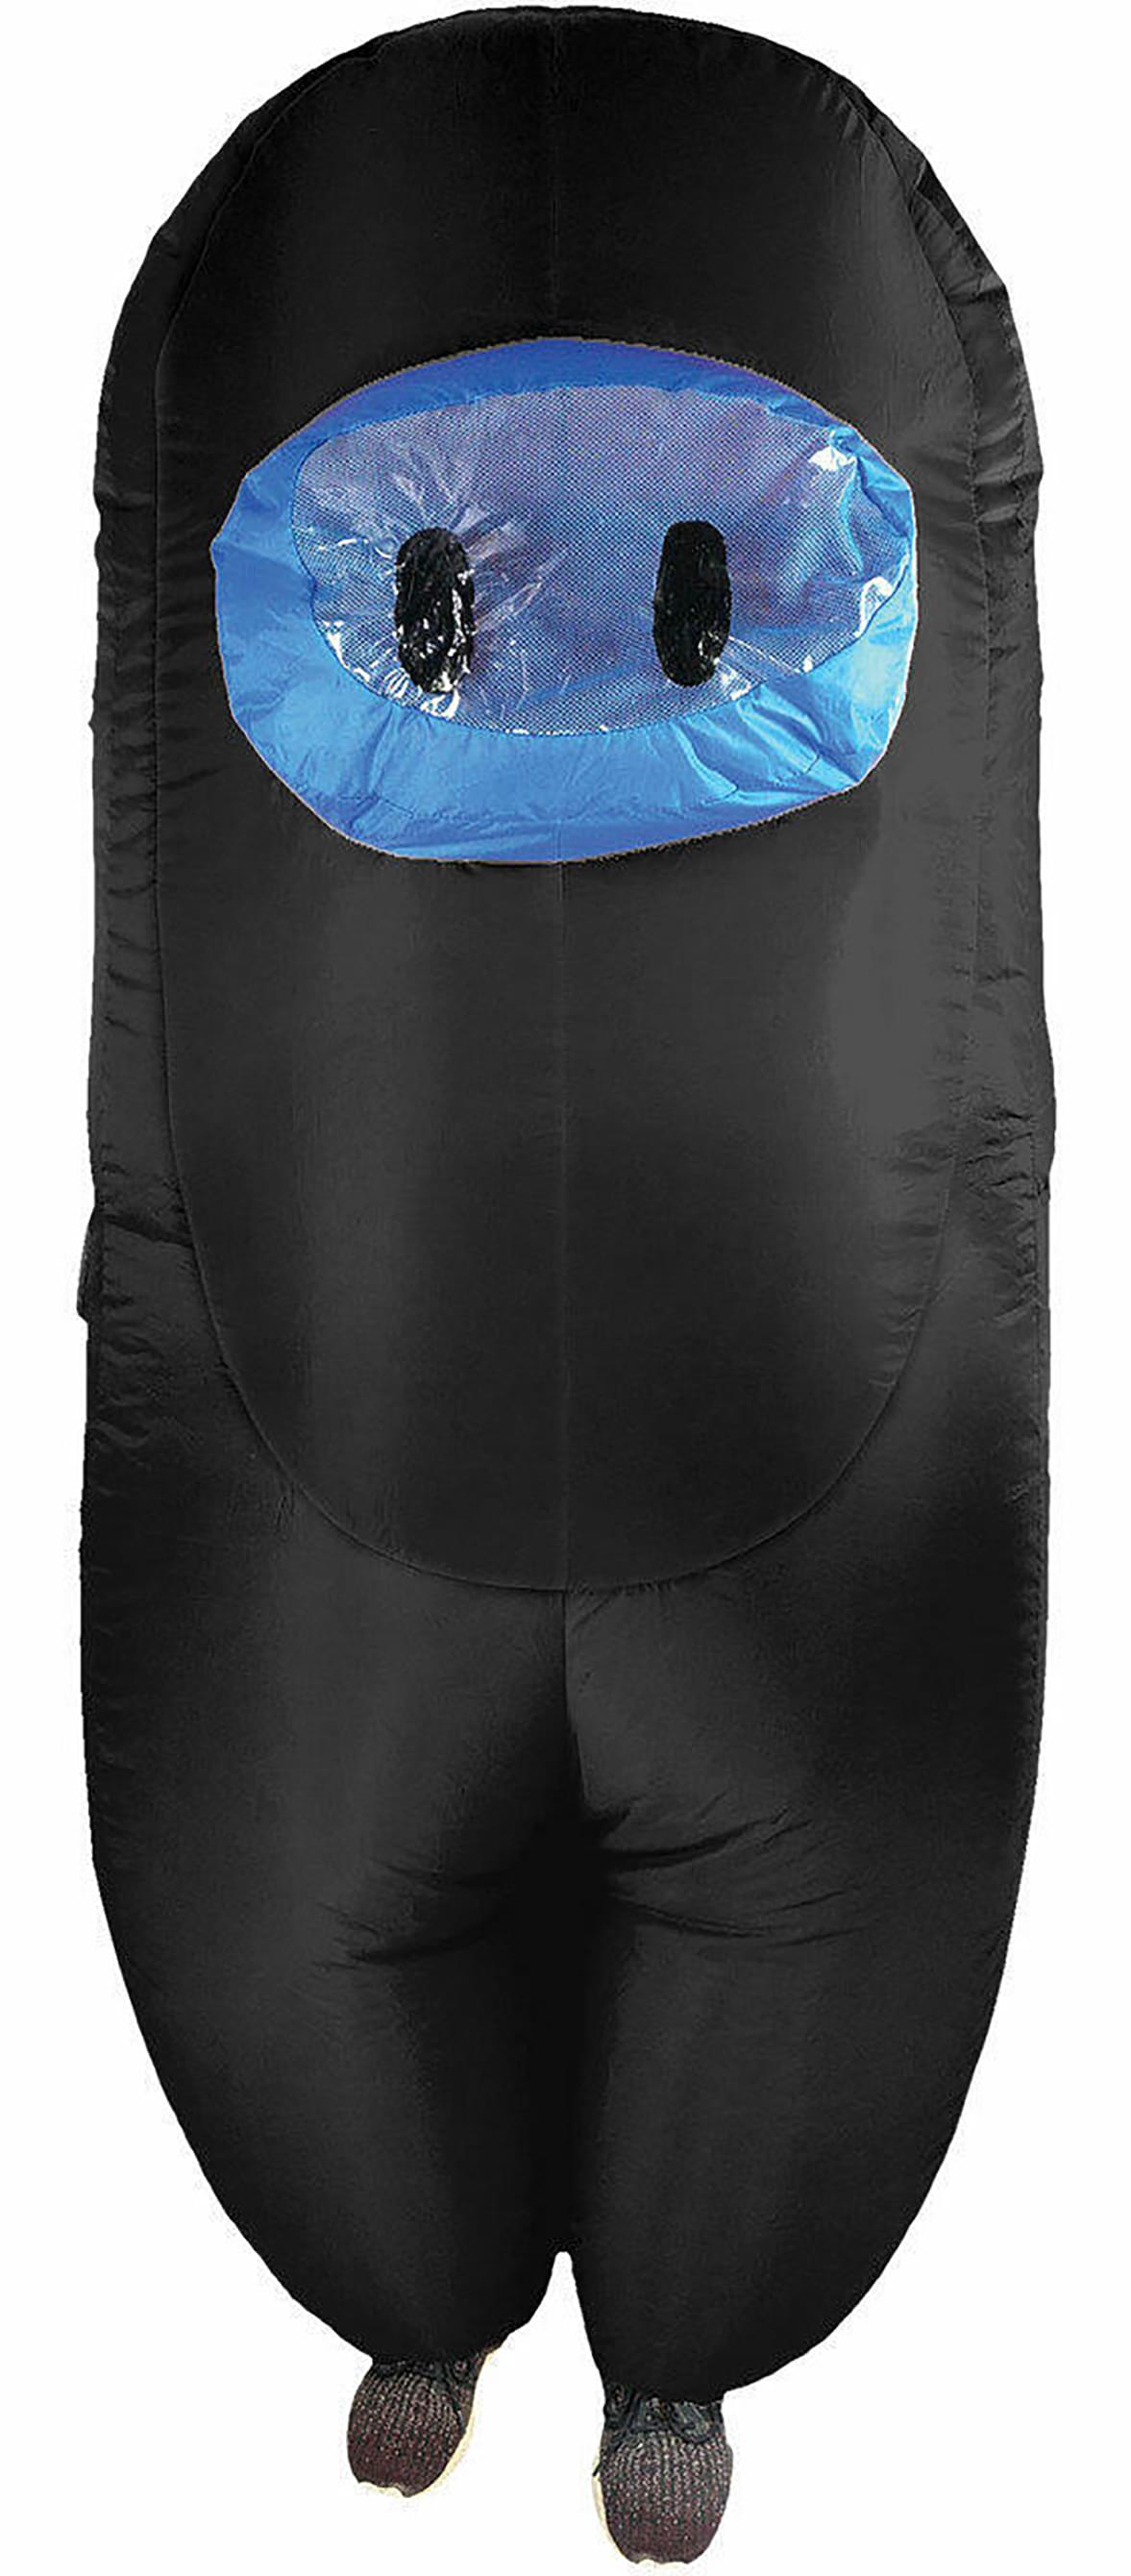 Black Imposter Inflatable Adult Costume | Standard